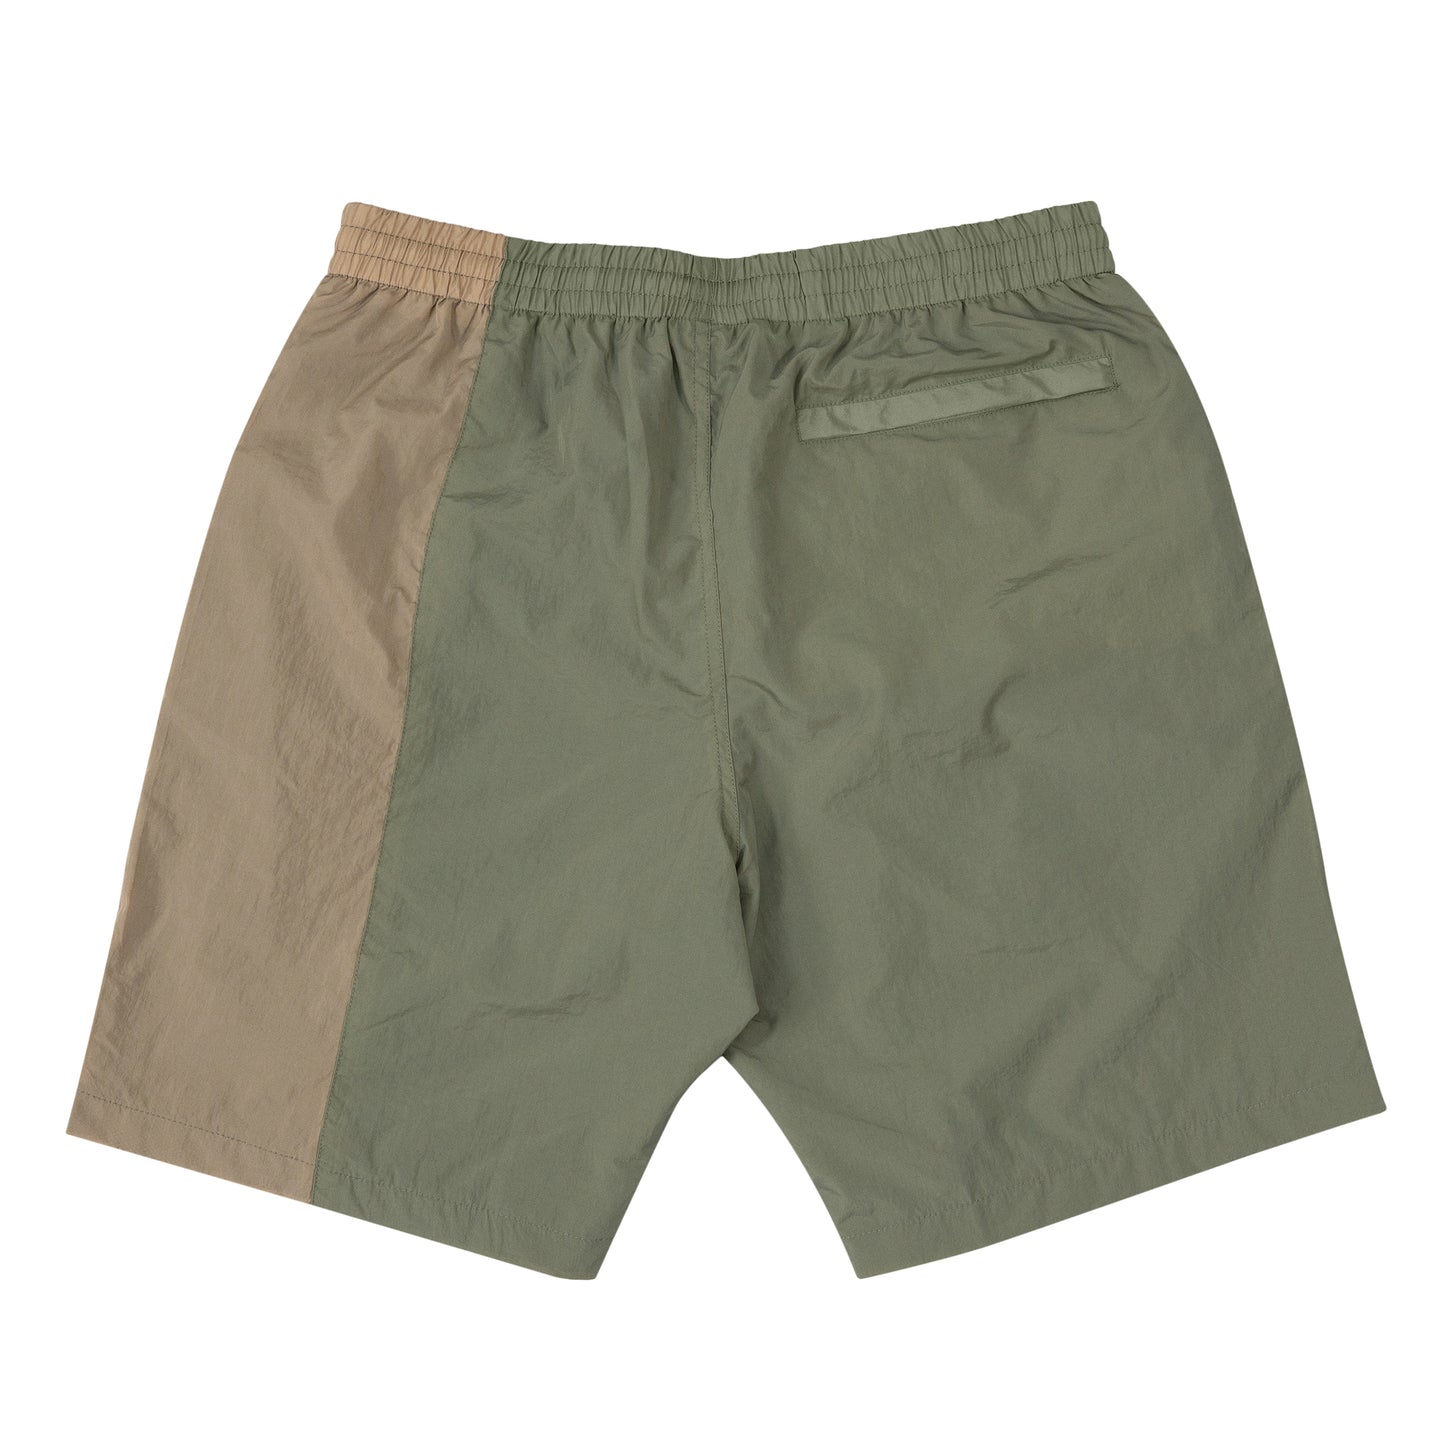 Nylon Water Shorts - Olive|Tan